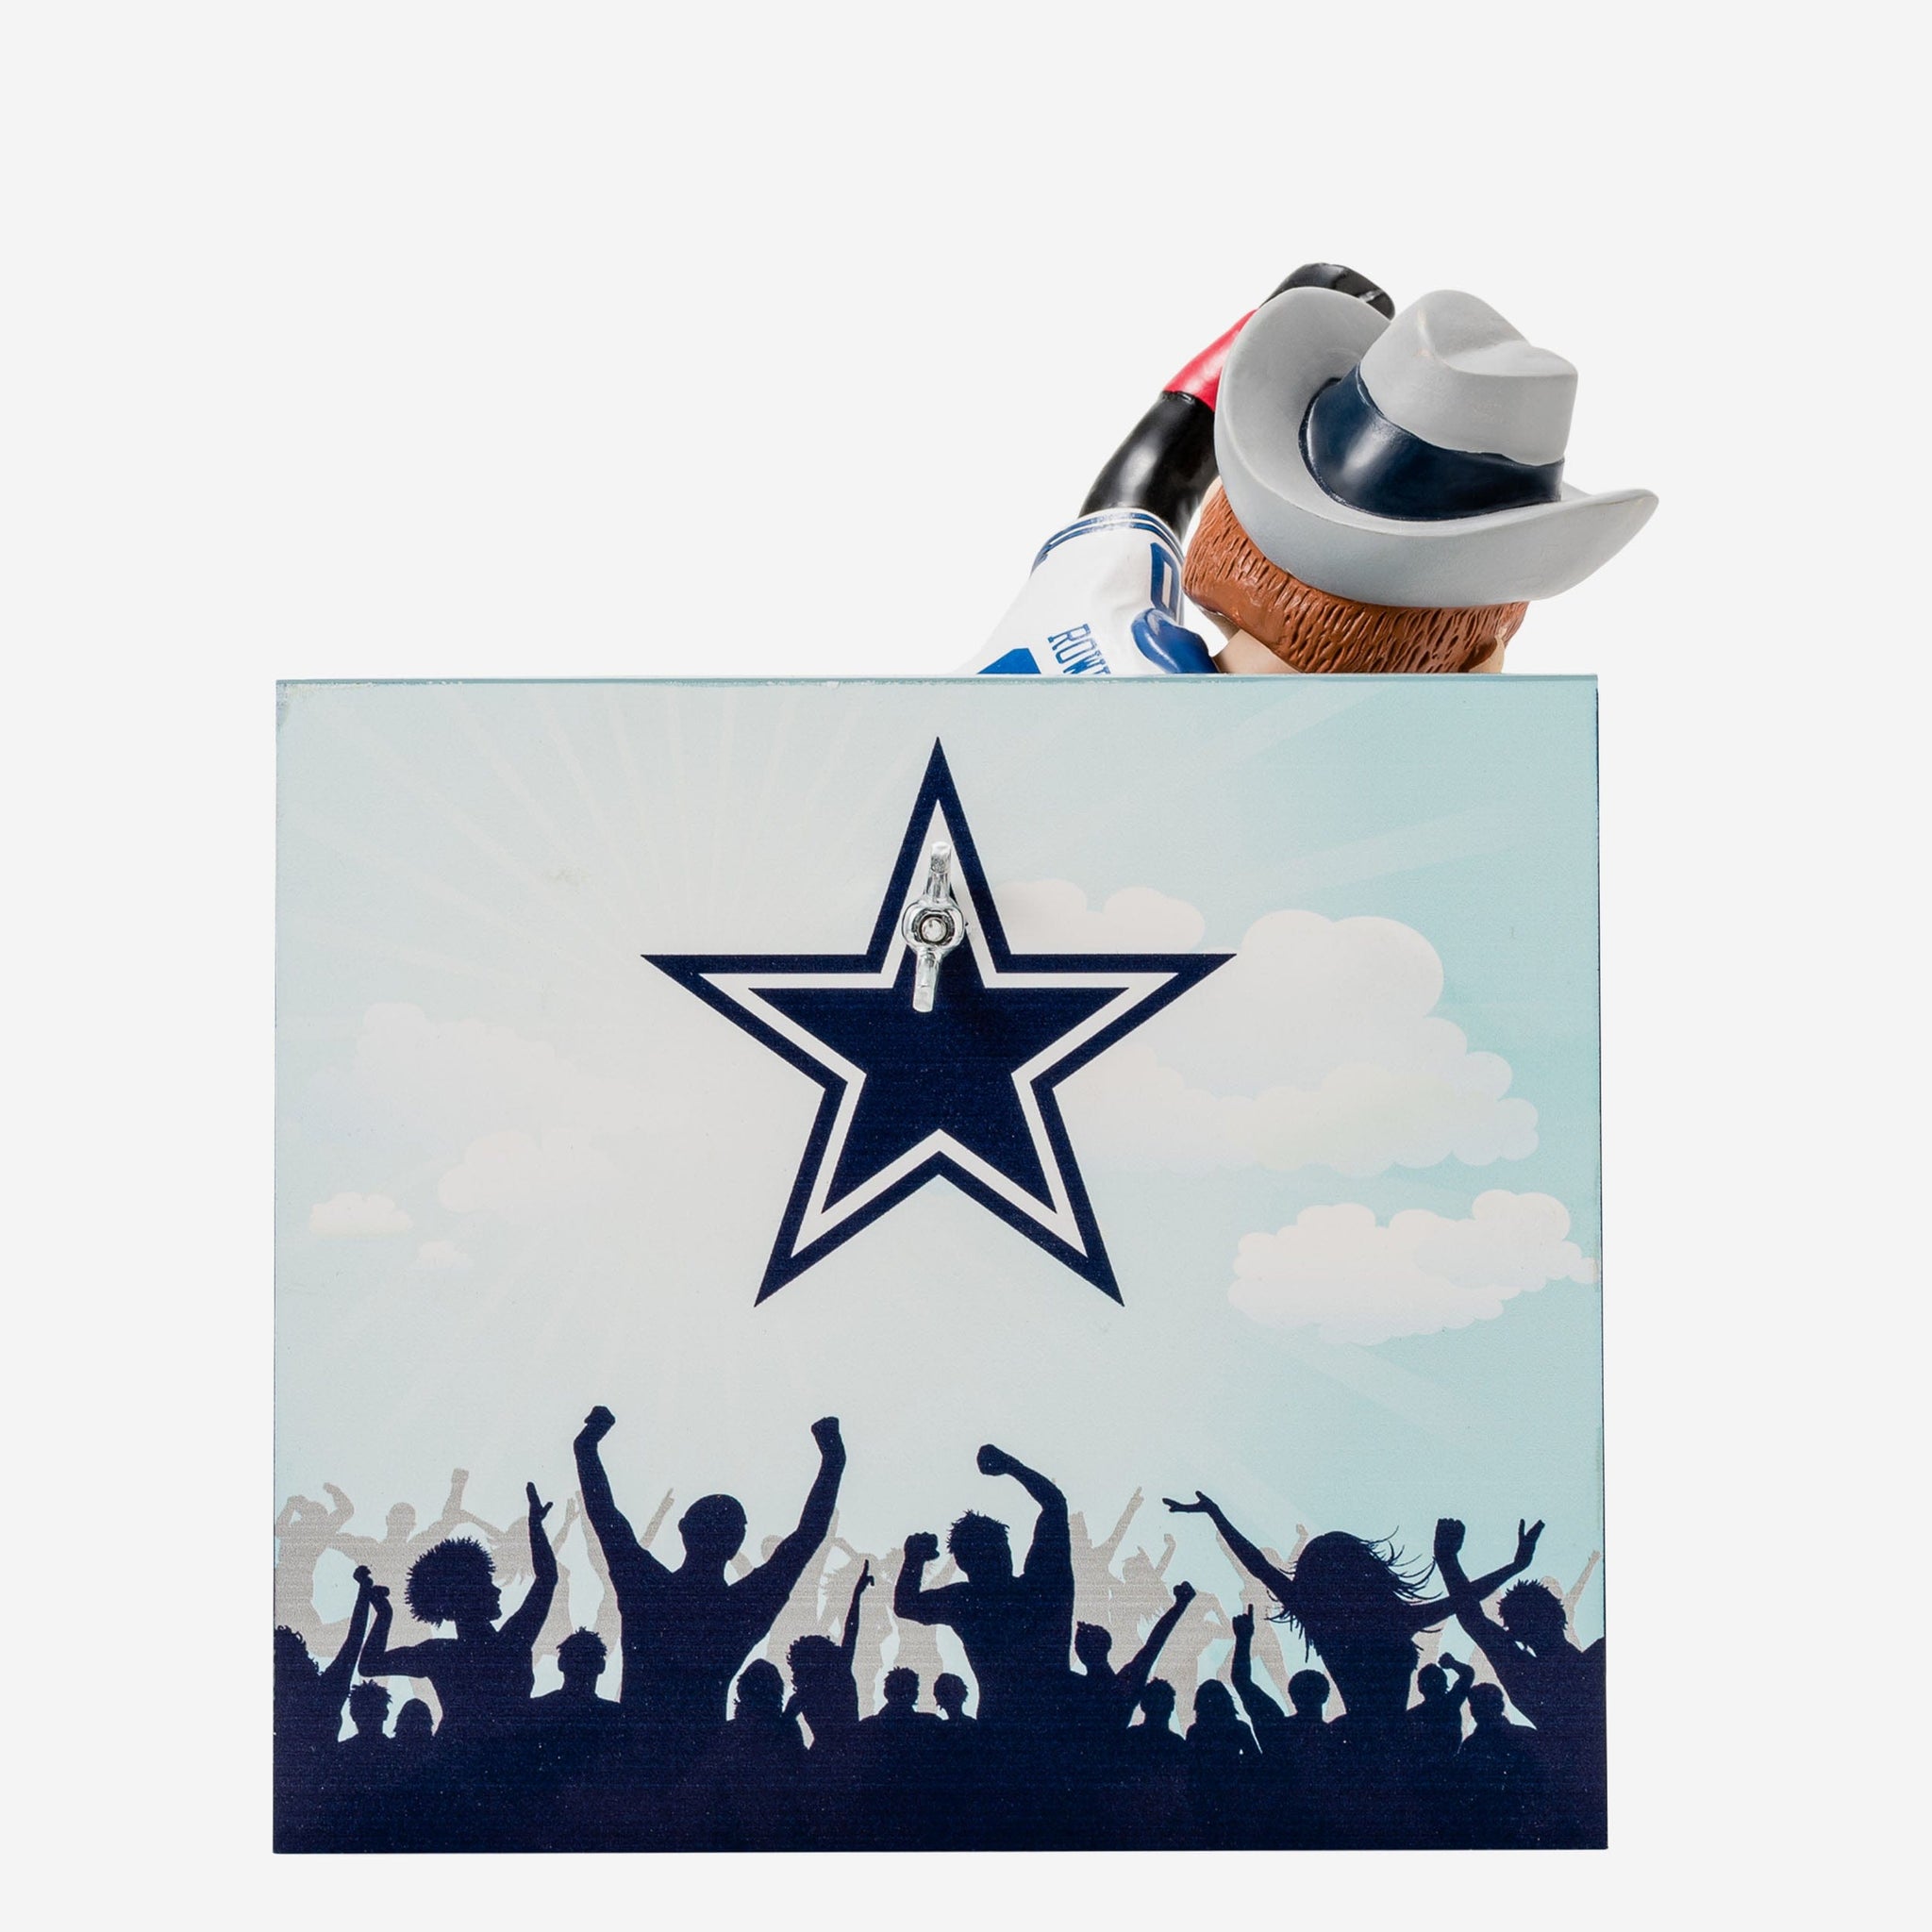 Rowdy Dallas Cowboys Holiday Mascot Bobblehead FOCO